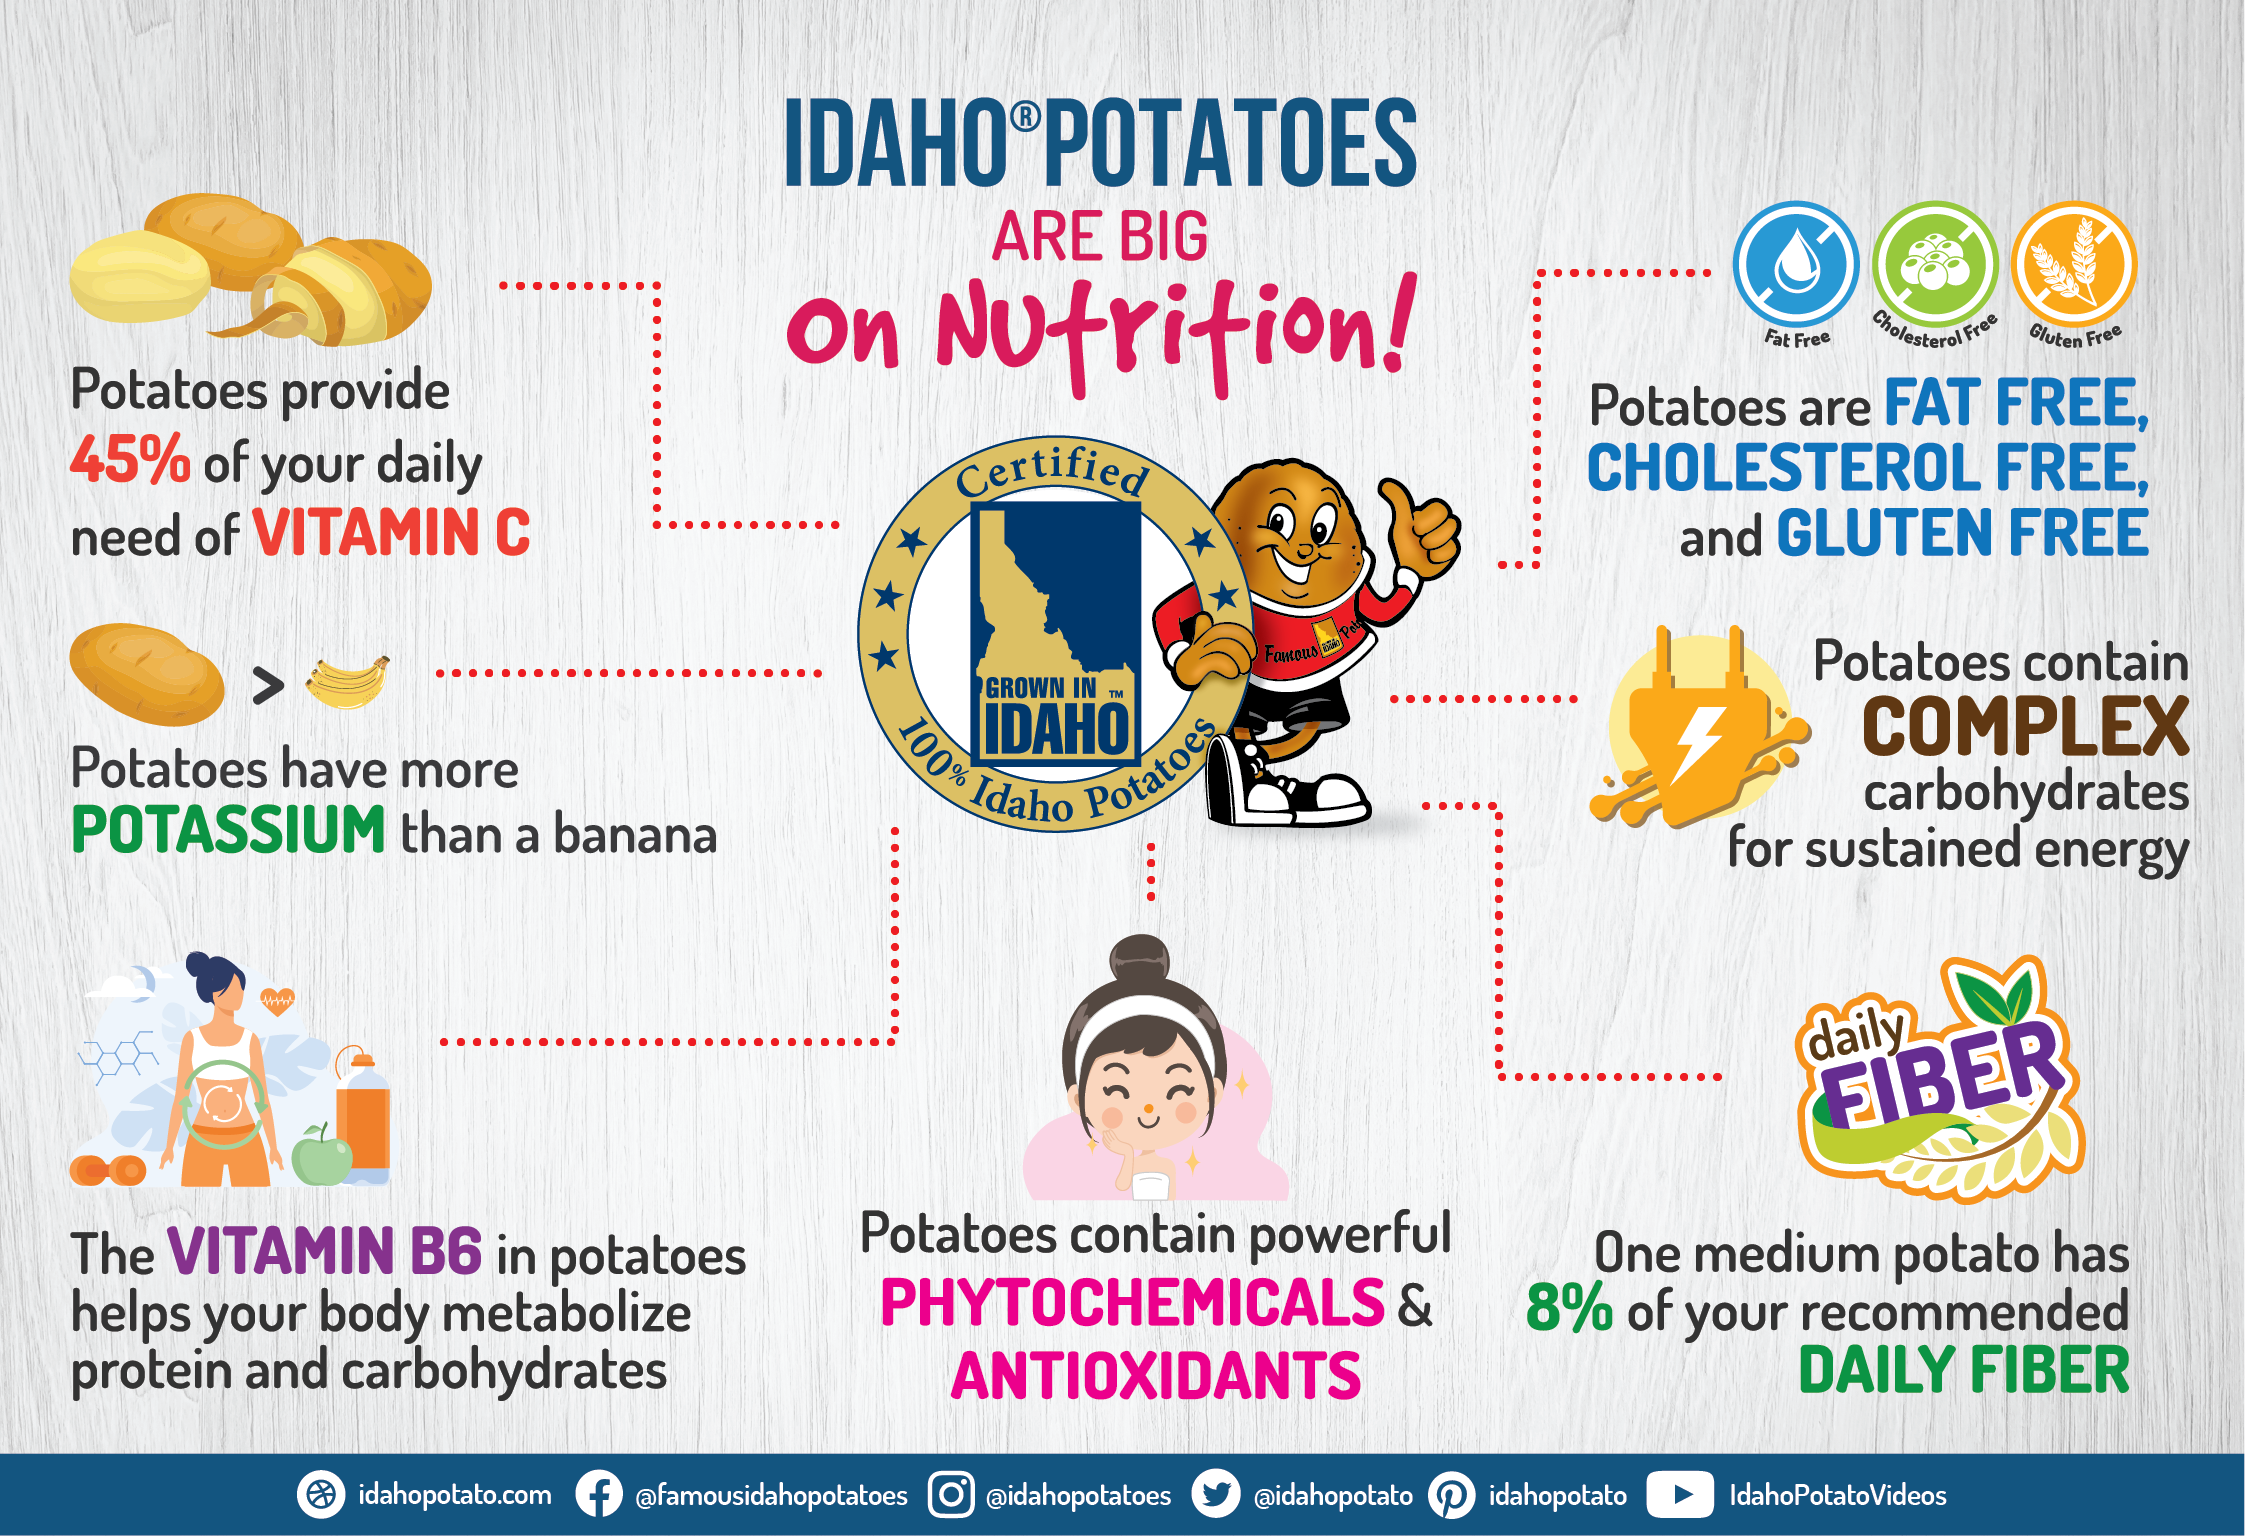 Idaho® Potatoes Are Big On Nutrition